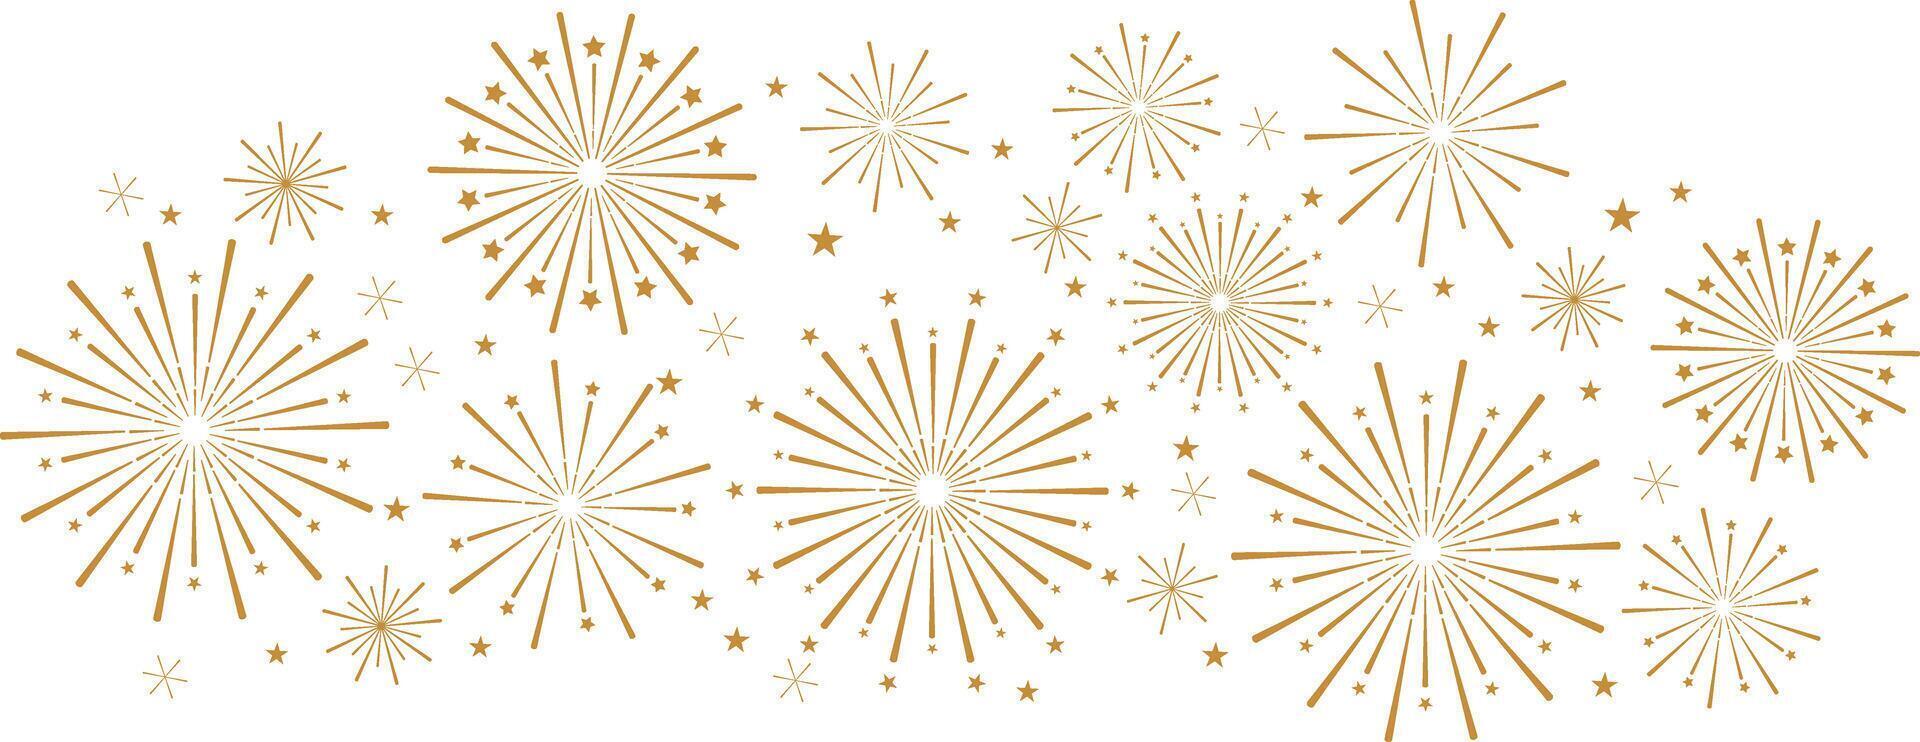 Festive firework banner with stars, golden clip art fireworks, isolated element vector